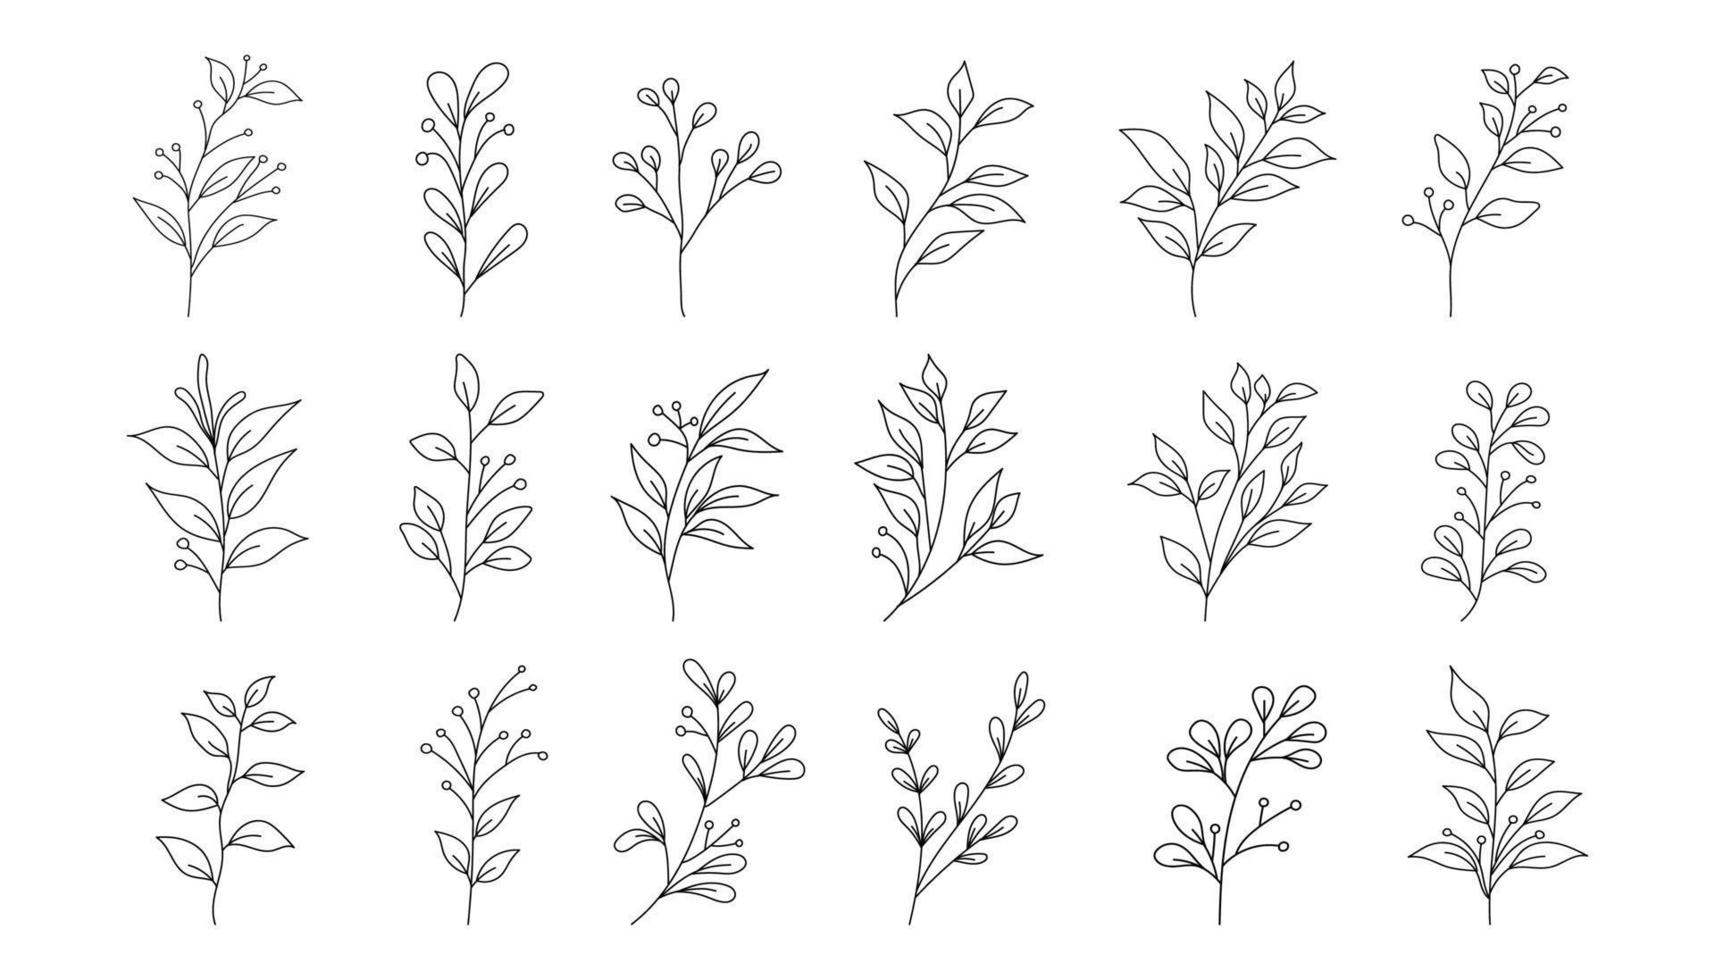 rabisco botânico moderno abstrato de flores silvestres em fundo branco vetor